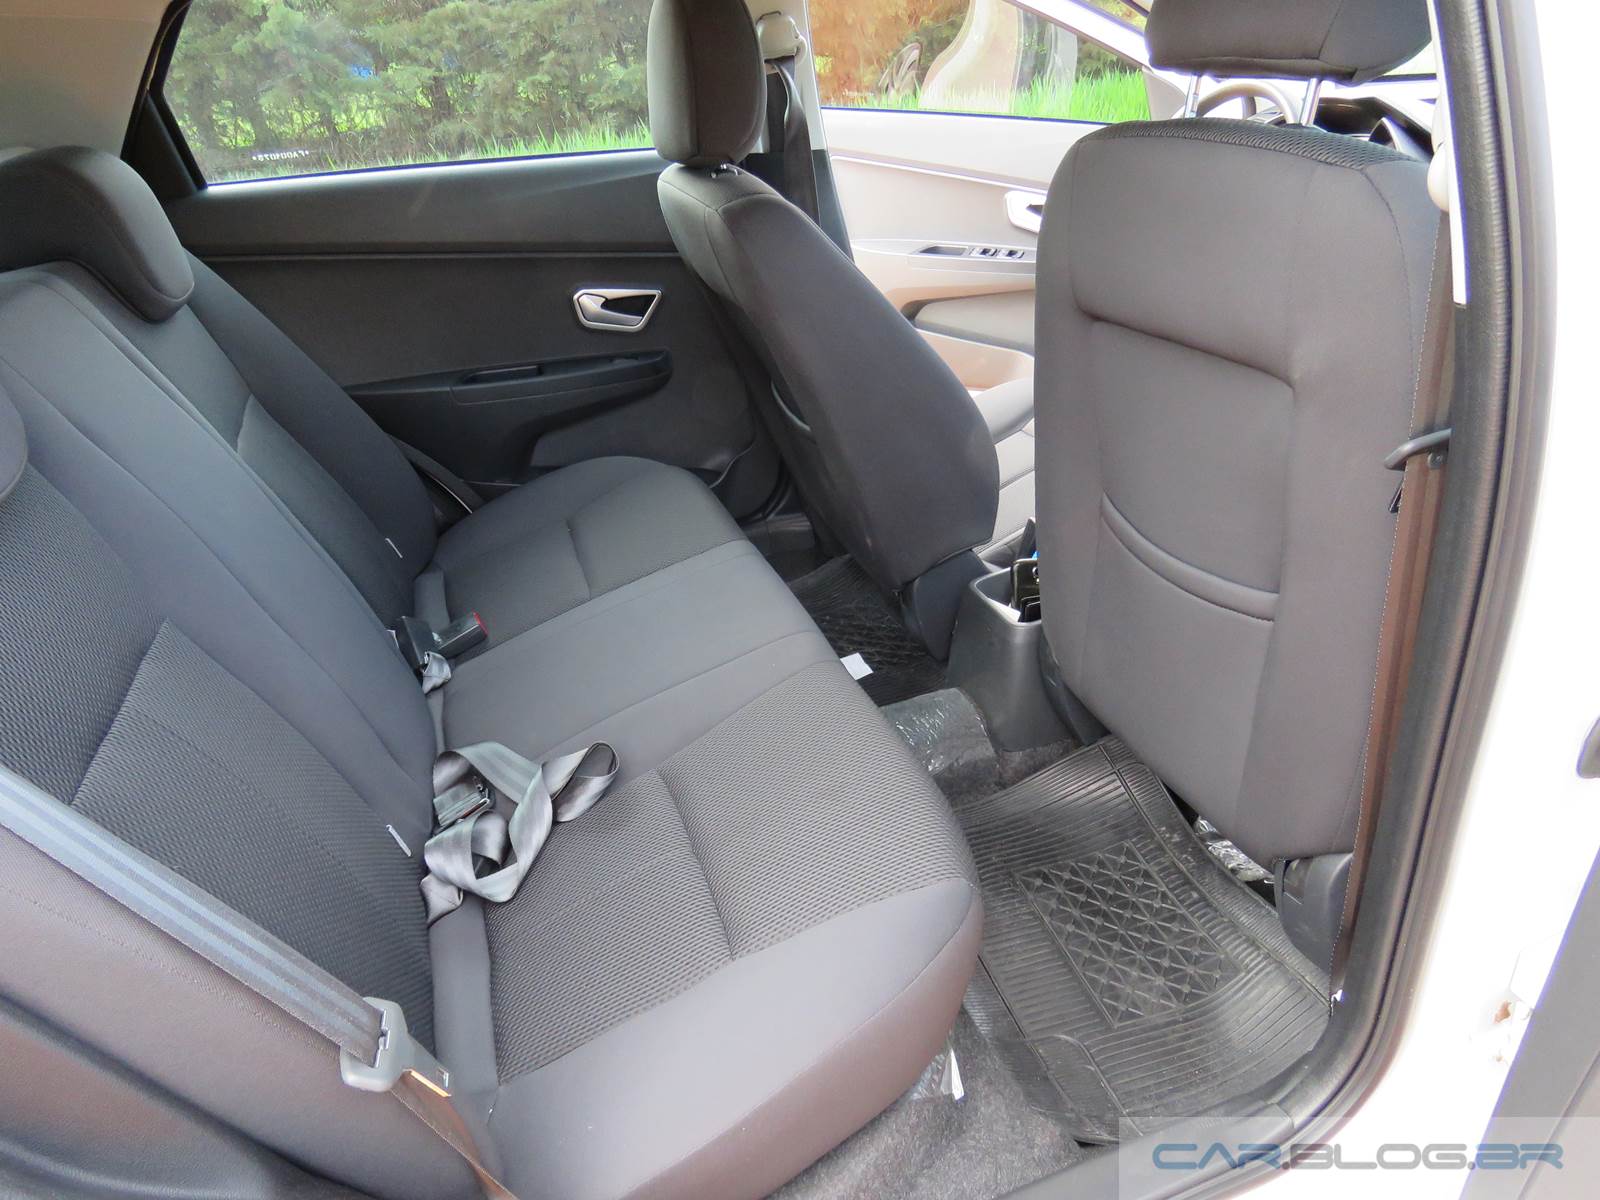 Chery Celer x Ford Ka - interior